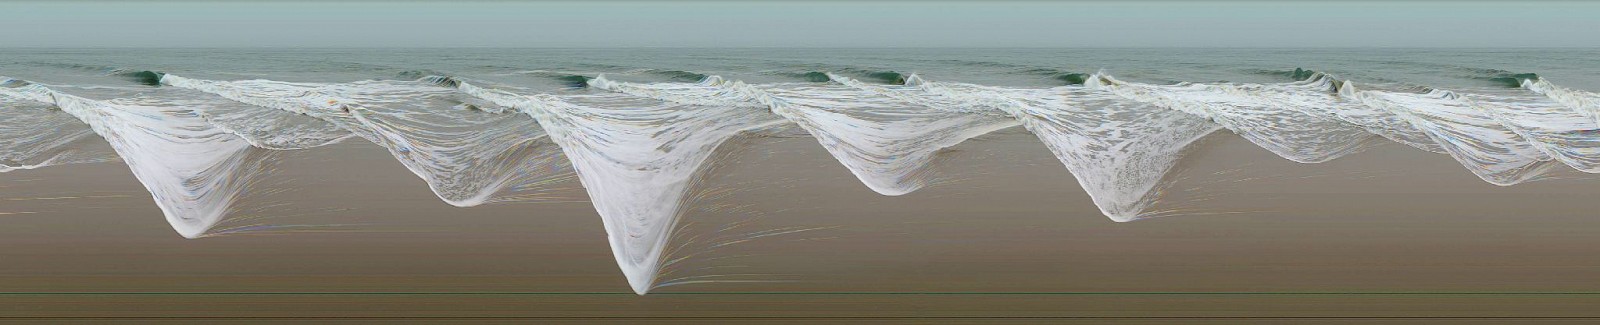 Jay Mark Johnson, VENICE BEACH WAVES 12, 2011 Venice Beach CA
archival pigment on paper, mounted on aluminum, 40 x 196 in. (101.6 x 497.8 cm)